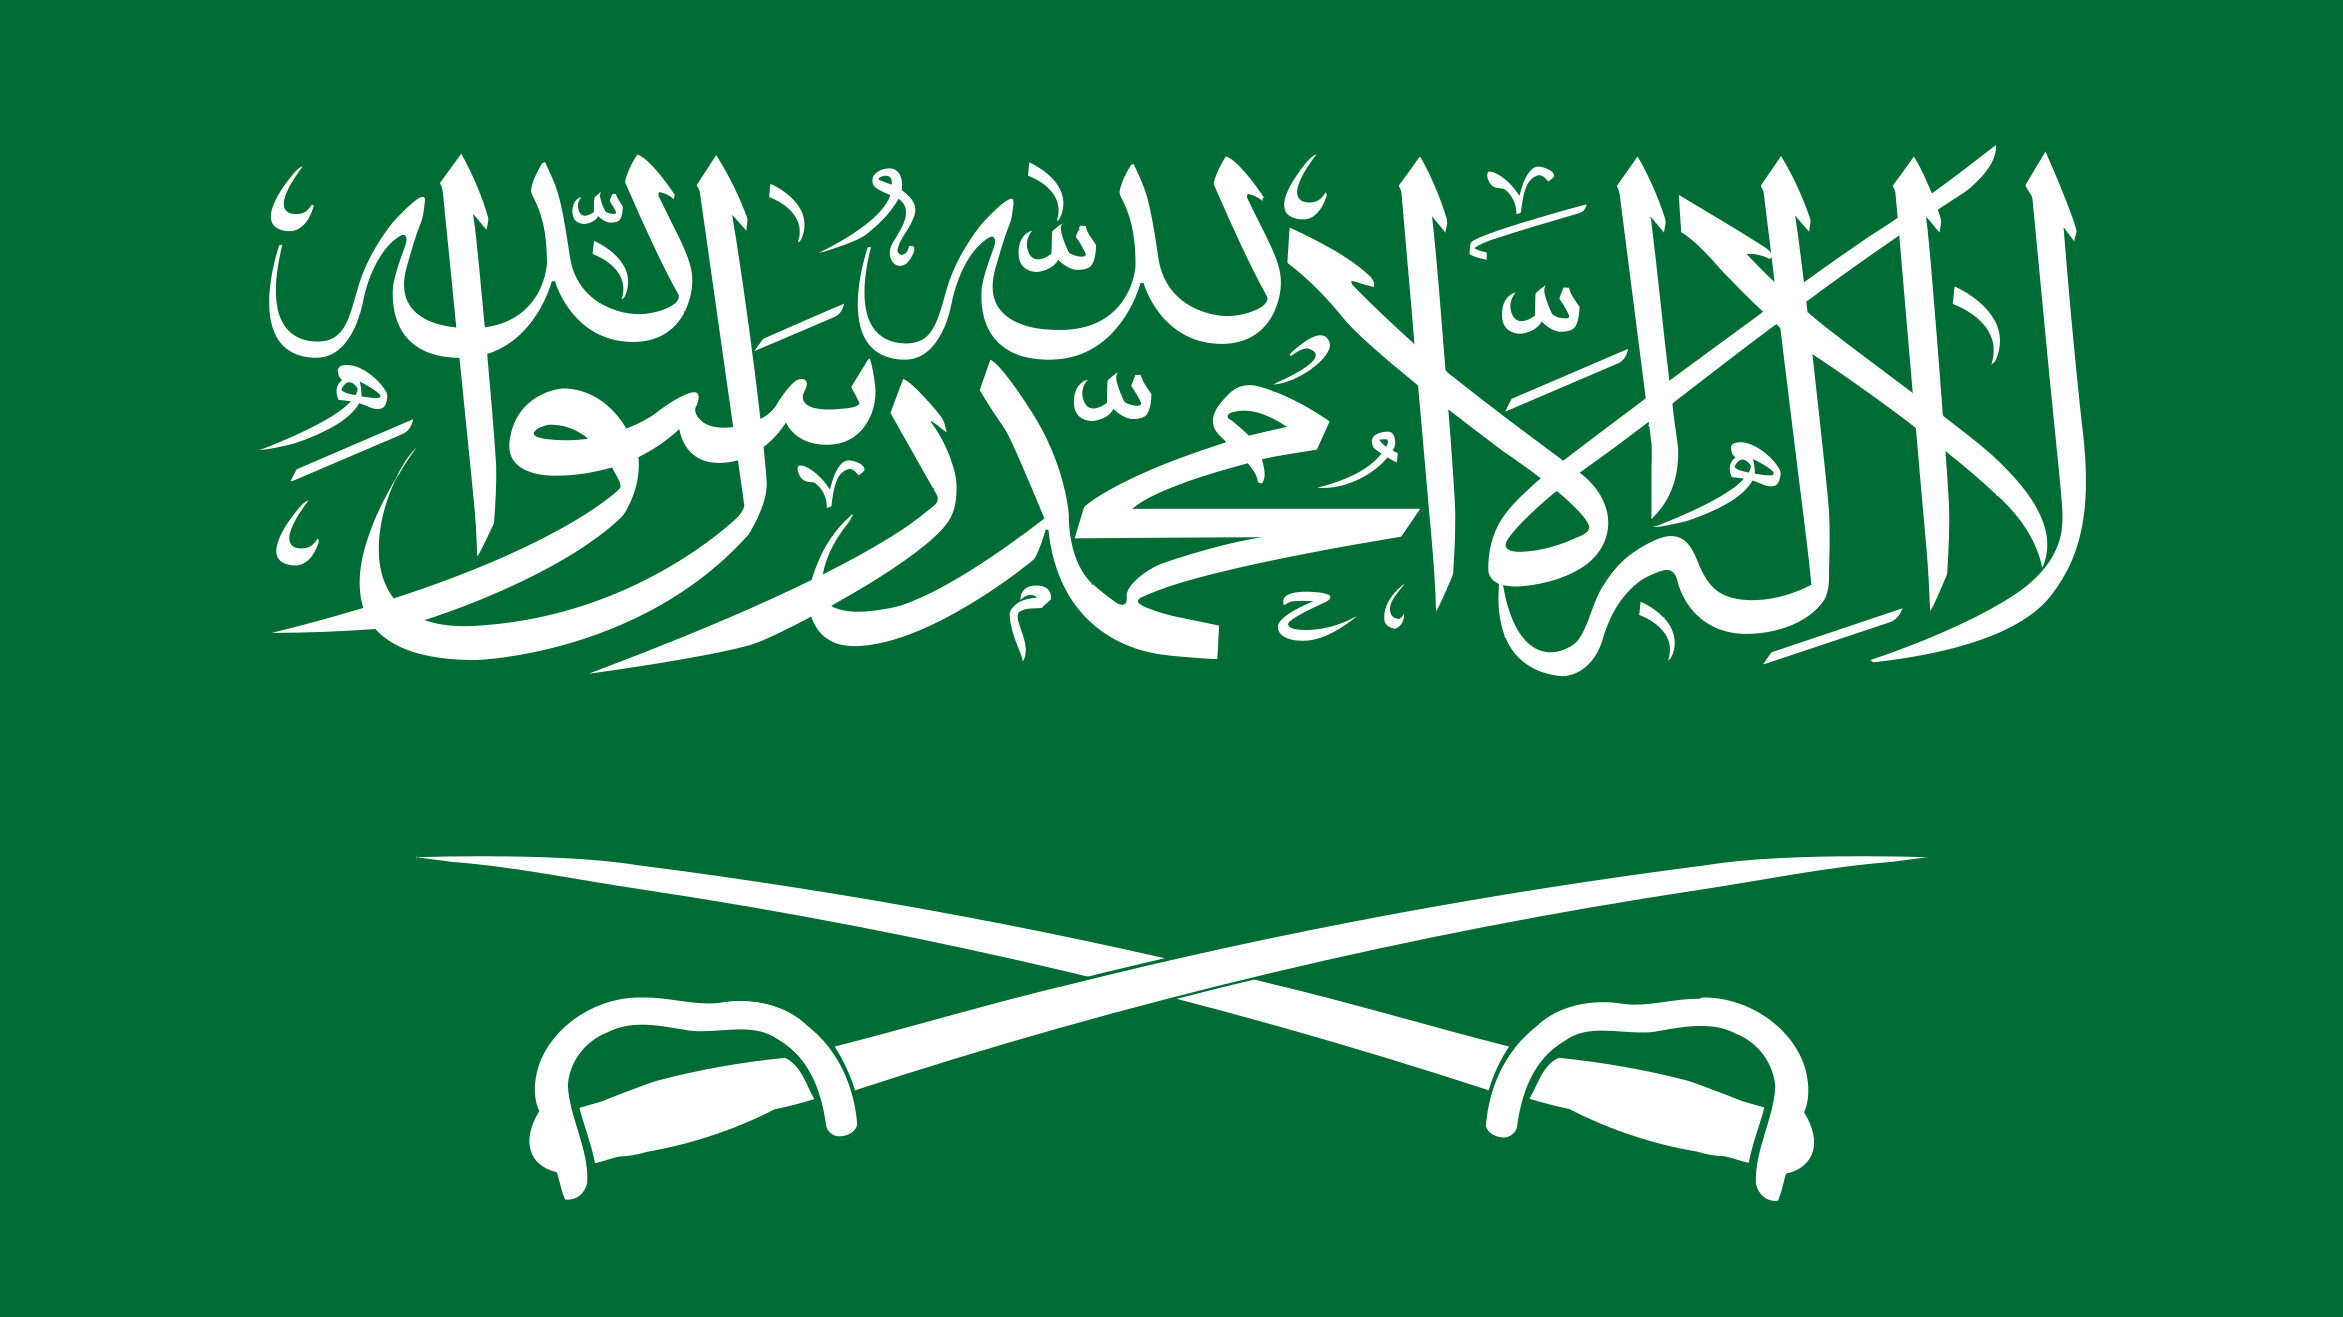 The House of Saud: Looks Like Us and We Look Like It